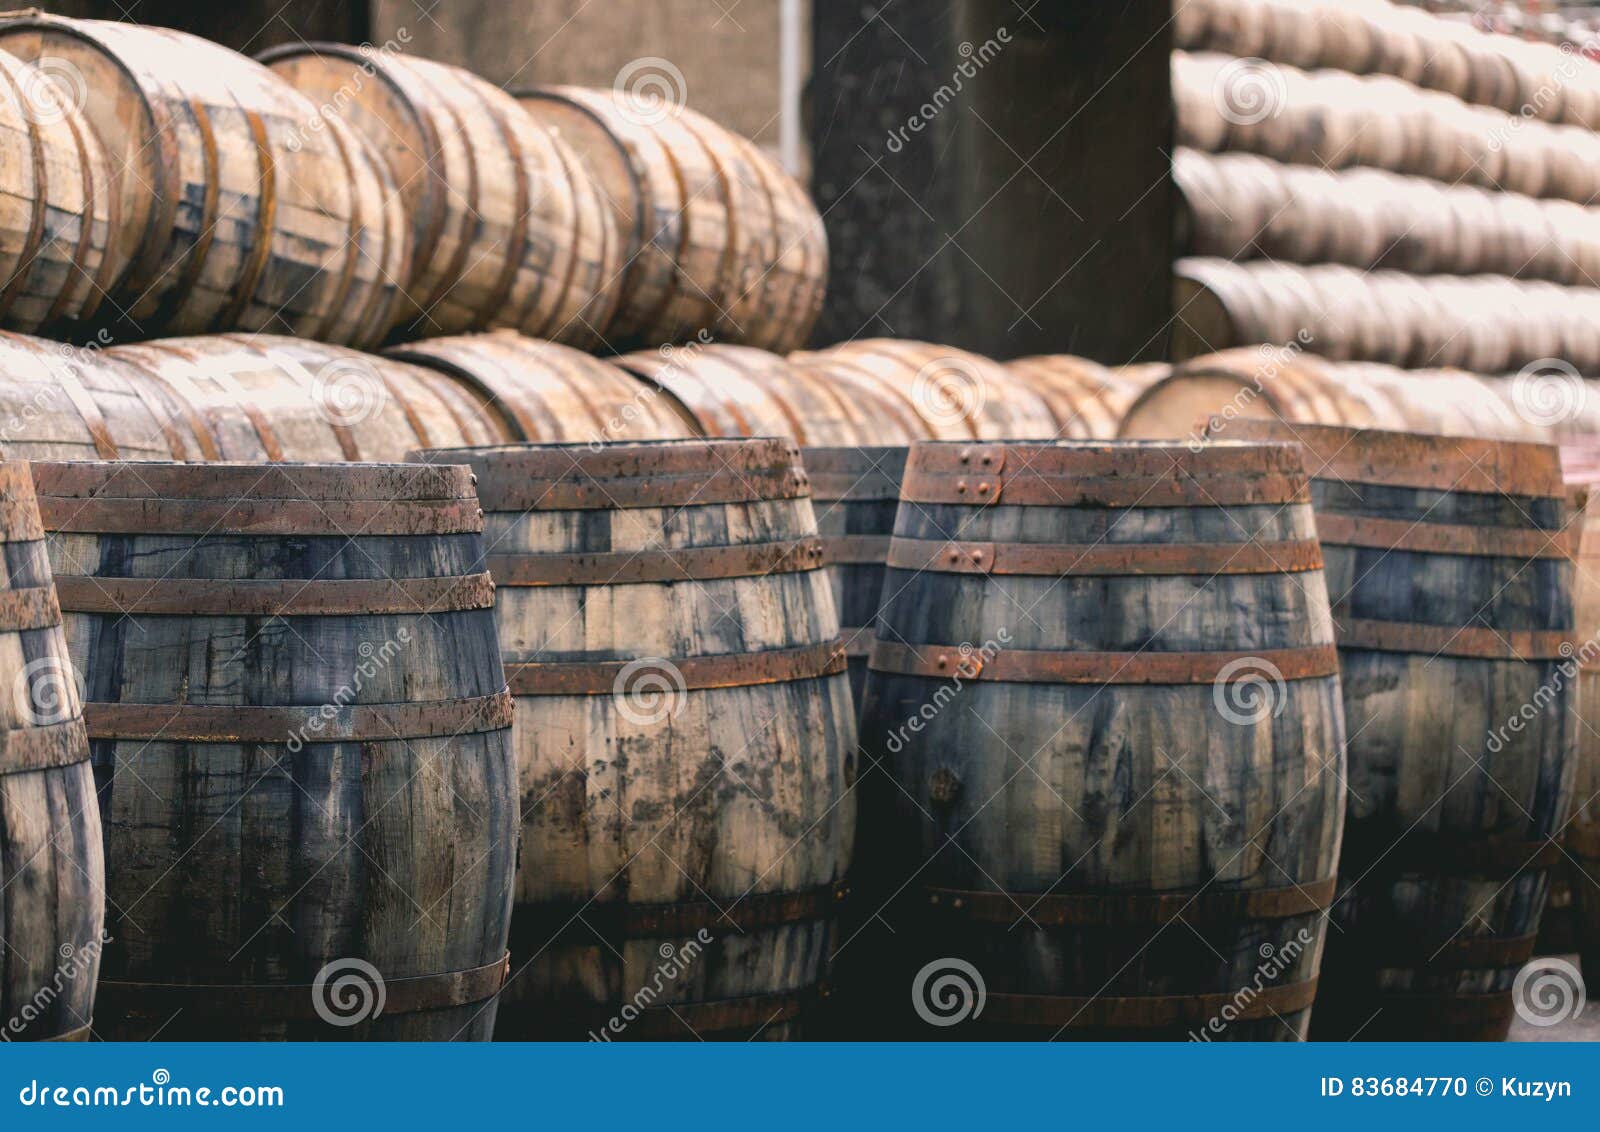 old vintage whisky barrels filled of whiskey placed in order in